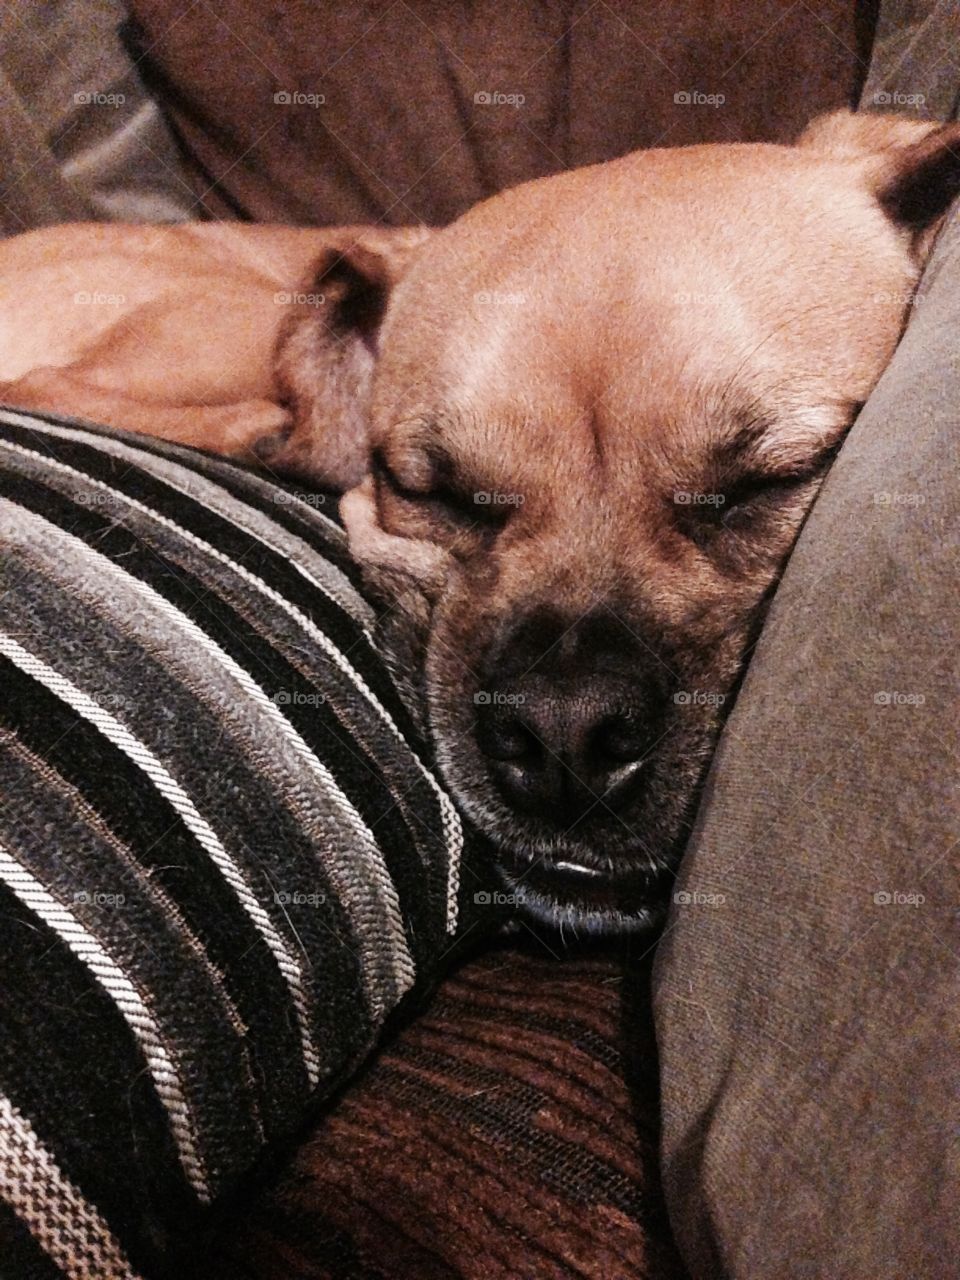 Sleeping pillow pug